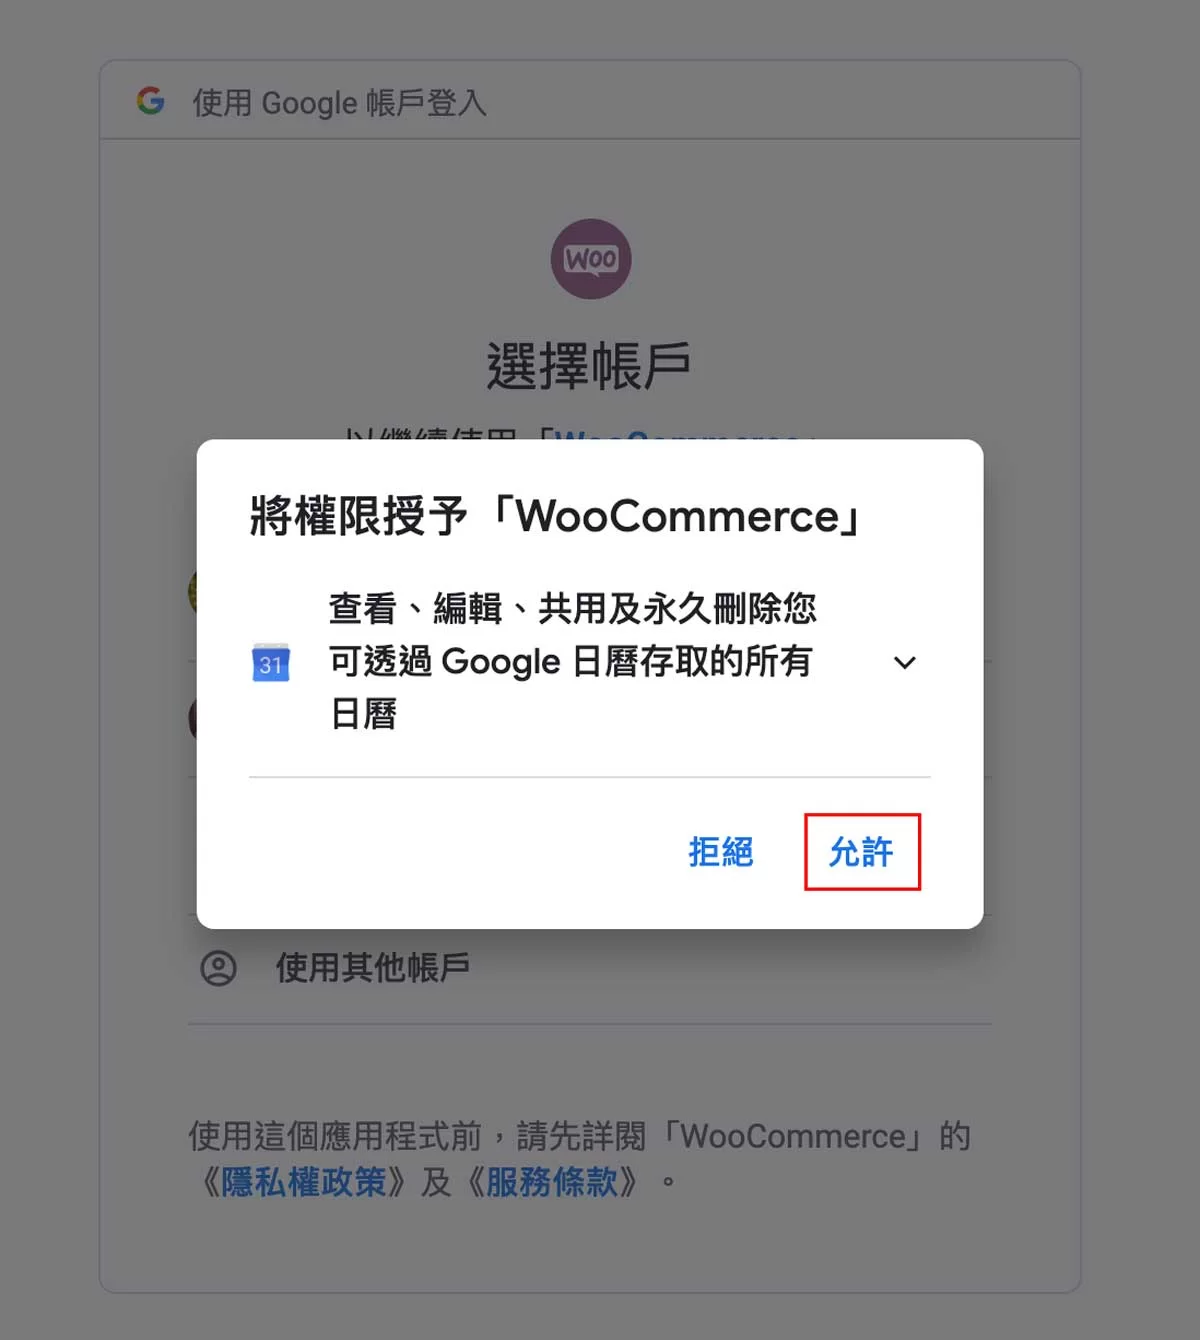 WooCommerce Booking 為網站啟用0人工預約服務 ｜WP實用外掛介紹戰國策集團